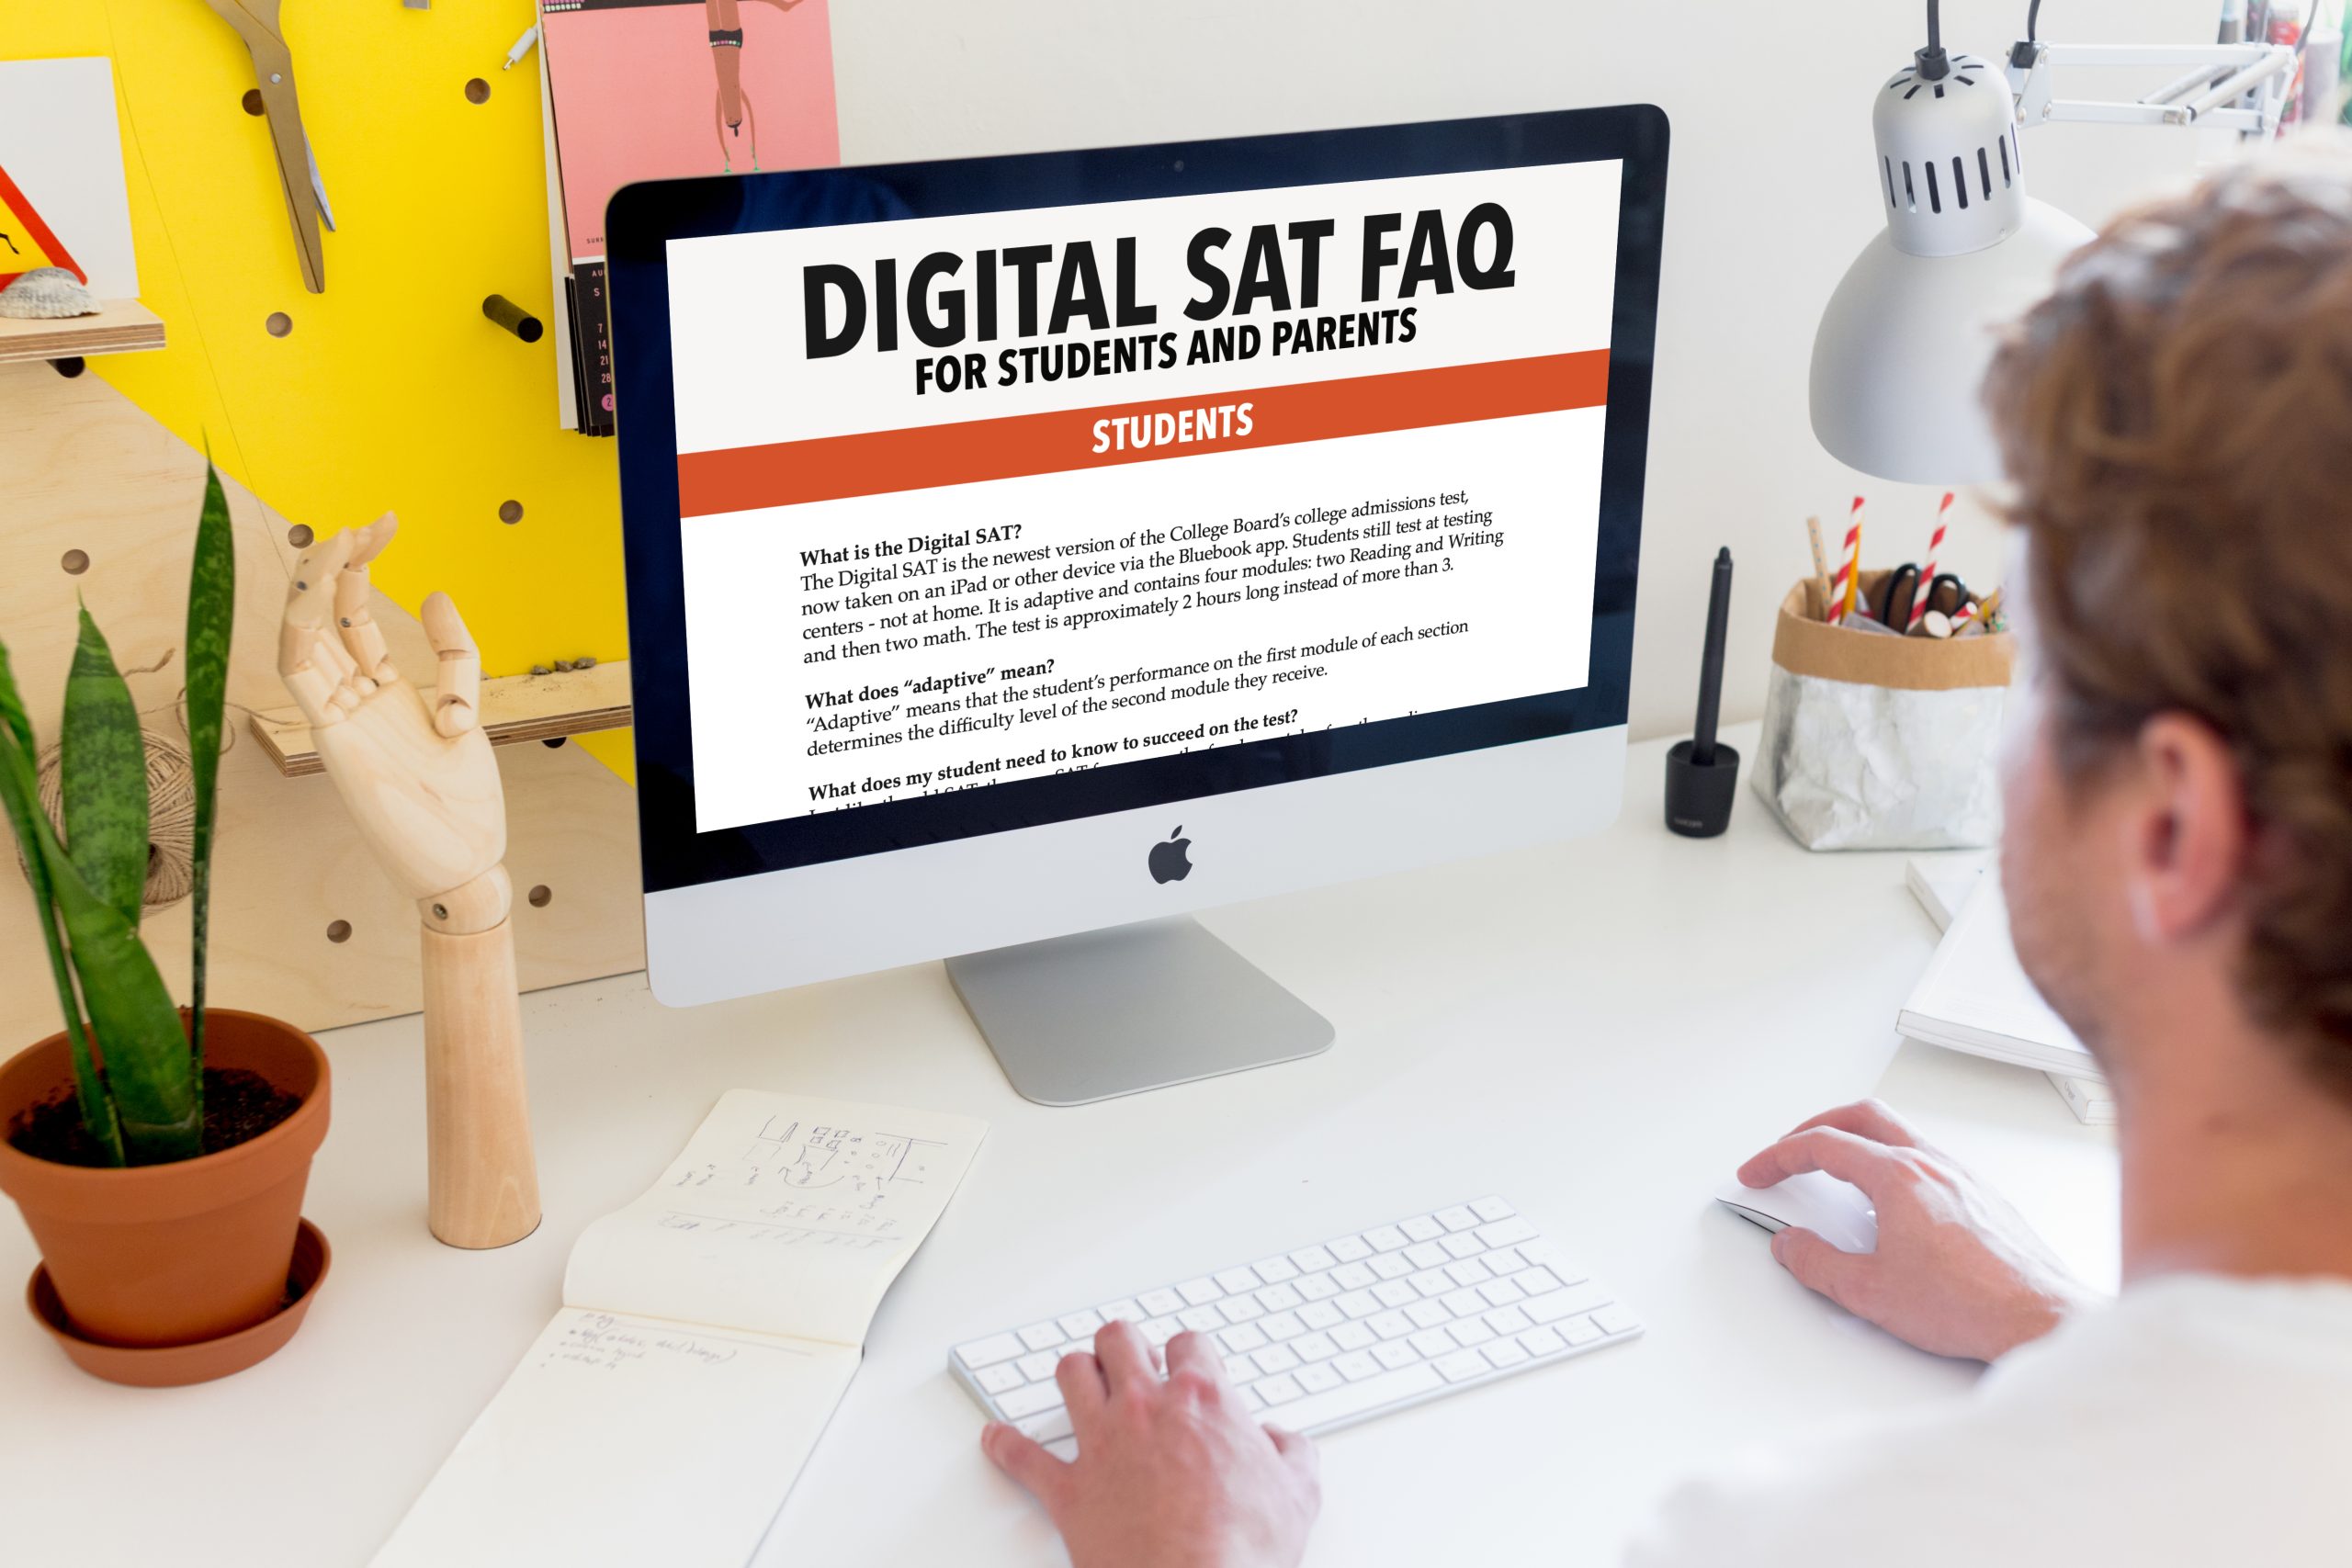 Digital SAT FAQs